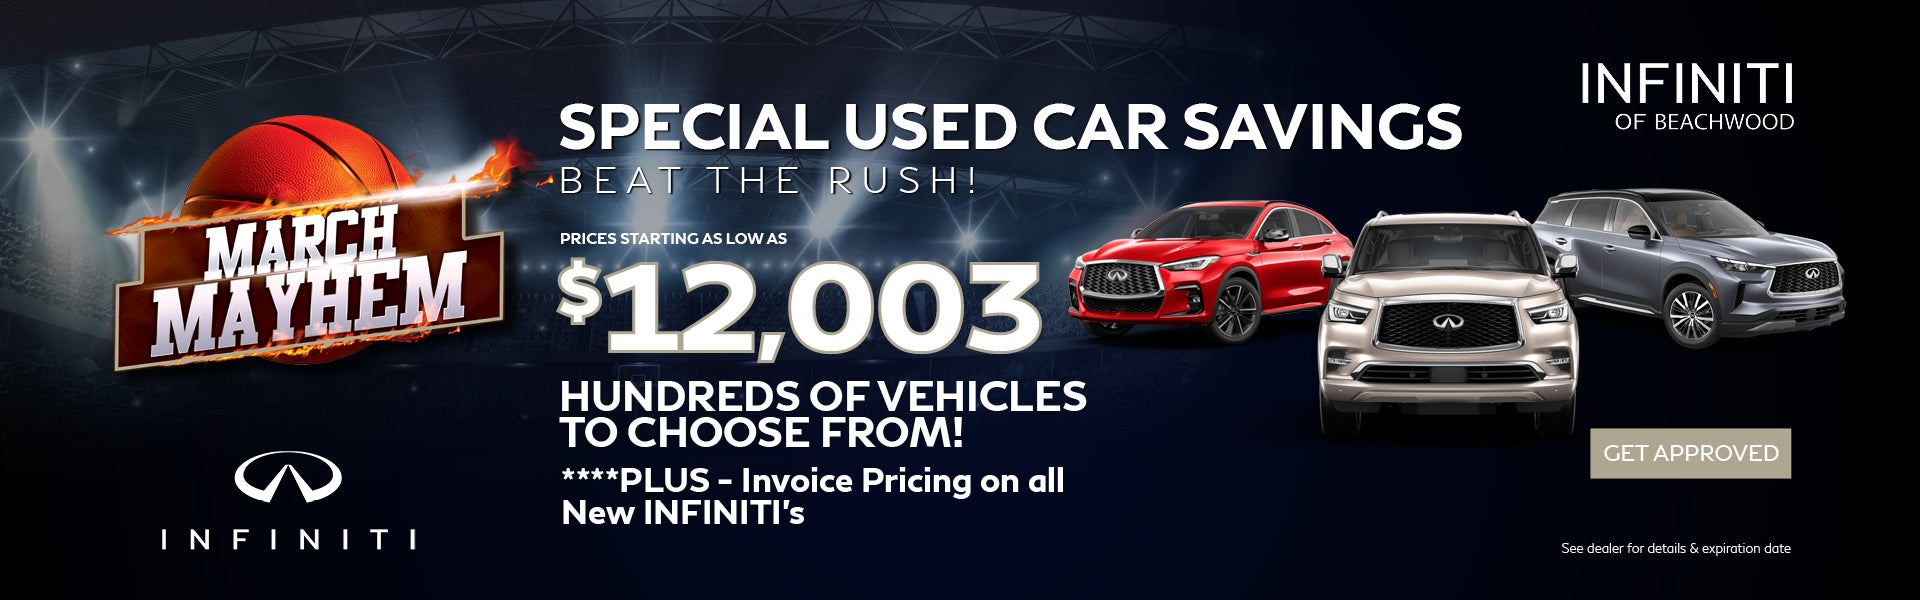 Used Car Savings